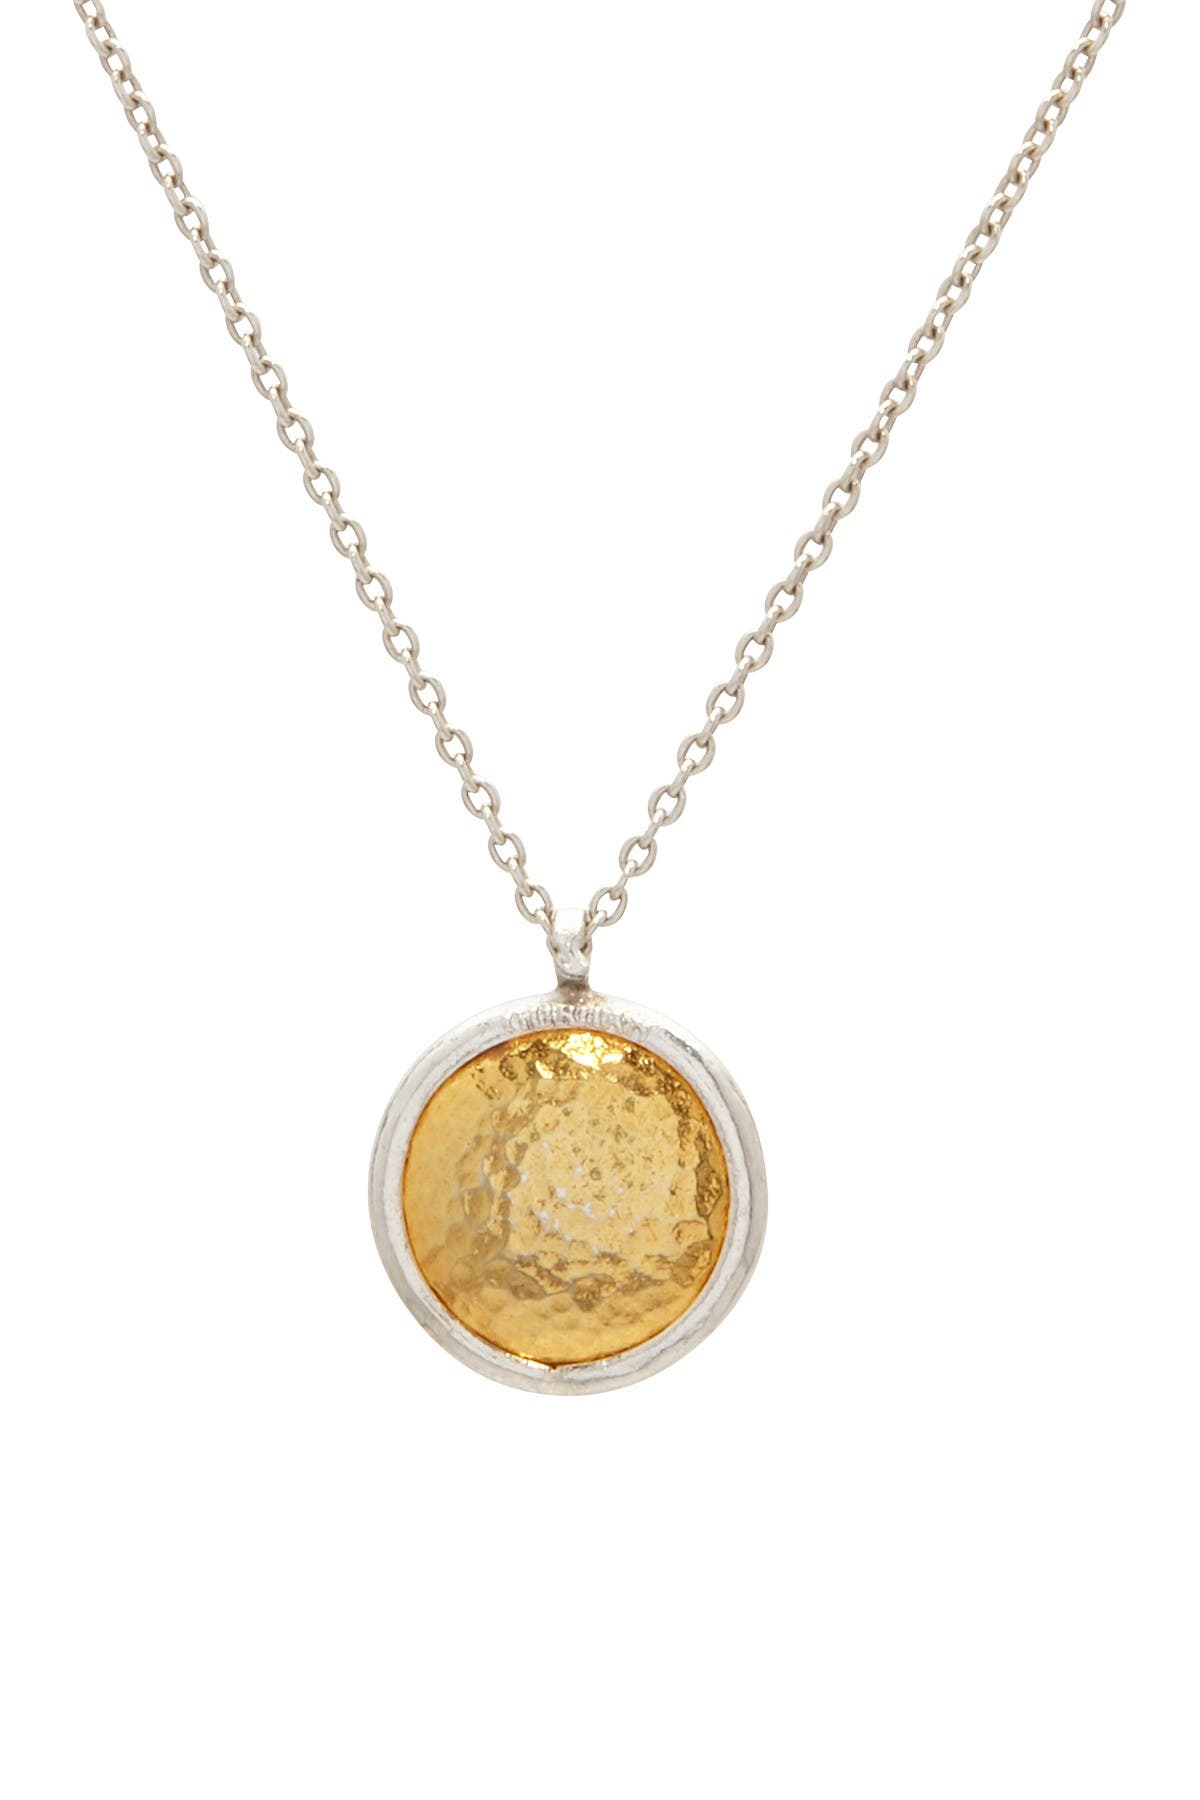 Gurhan 24k Gold Vermeil & Sterling Silver Hammered Round Amulet Pendant Necklace